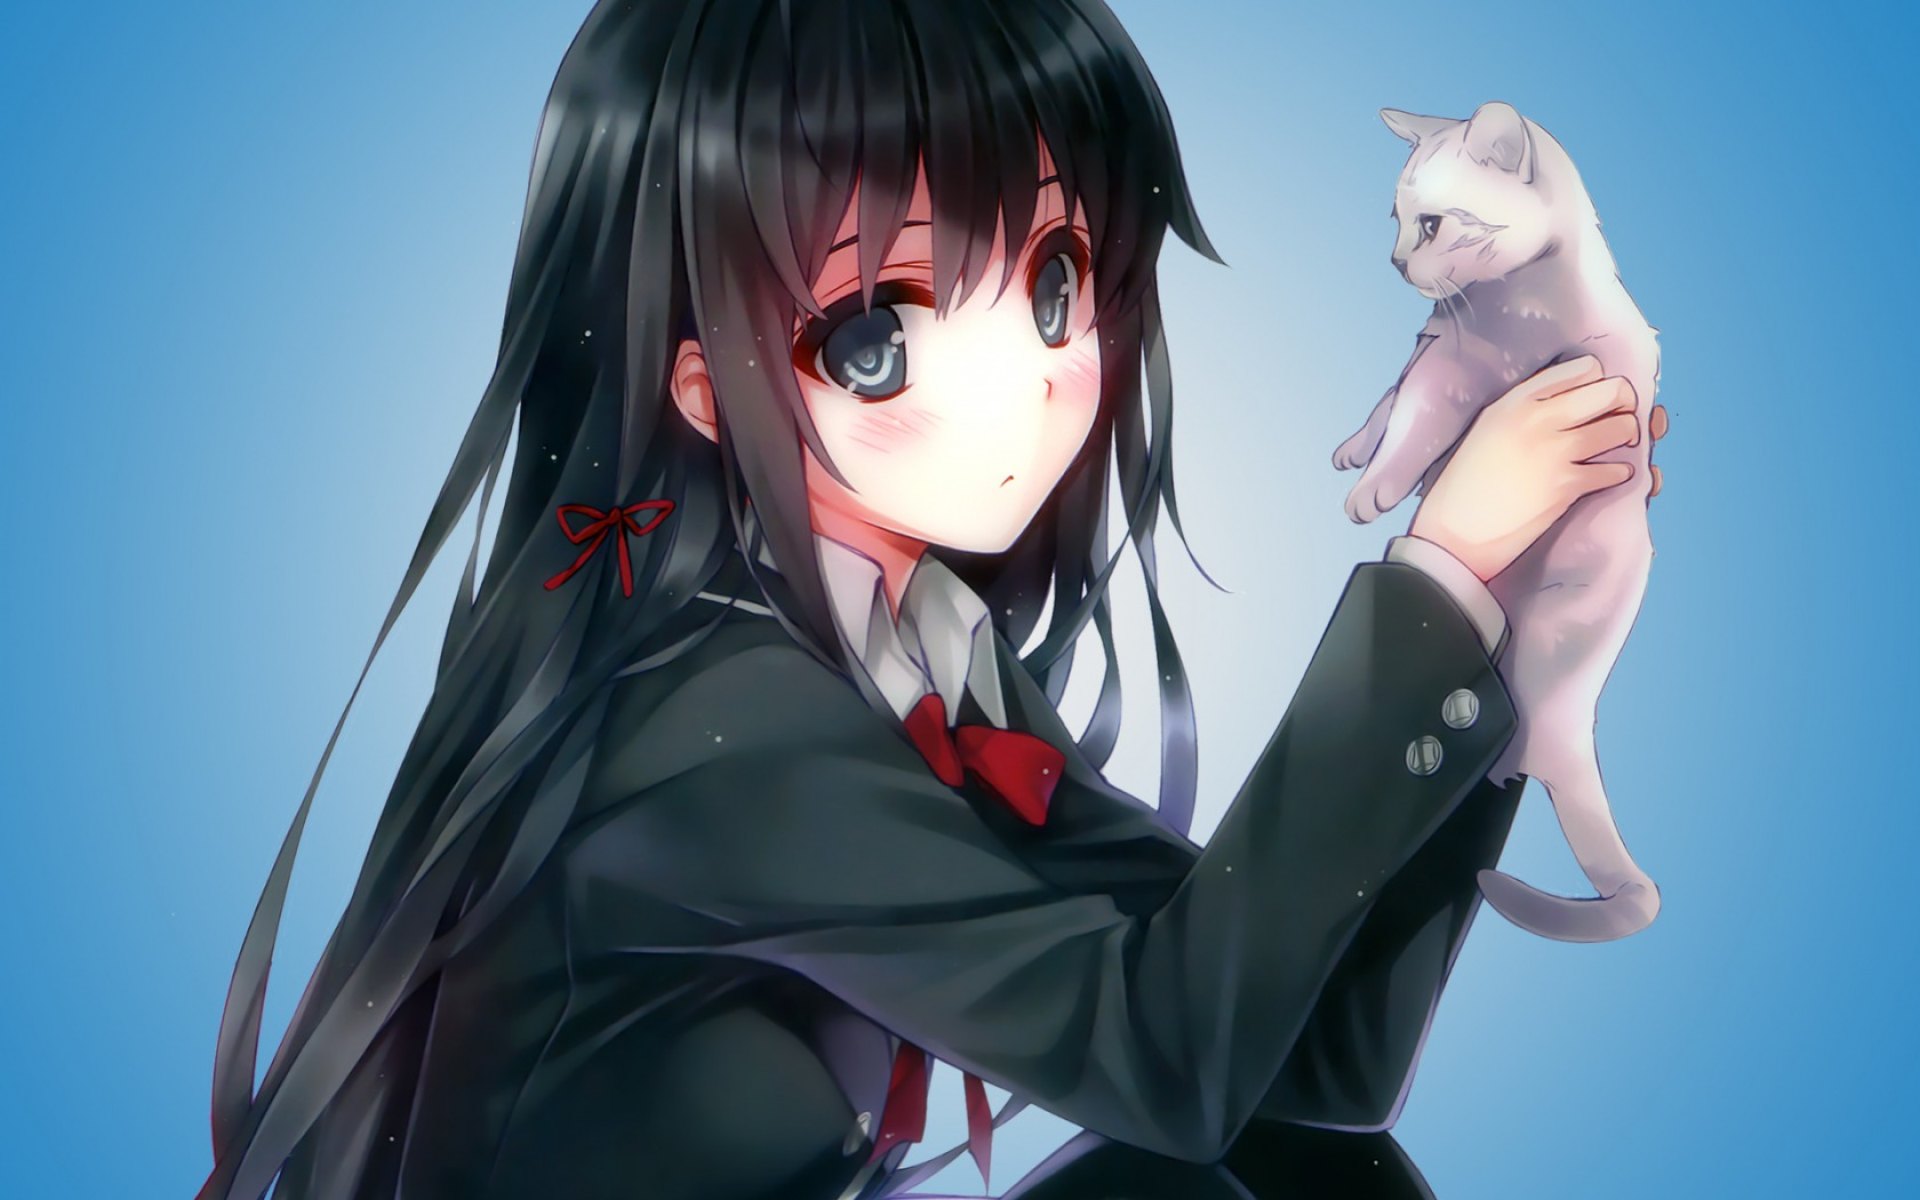 cute, school, pretty, uniform, girl, anime, cat